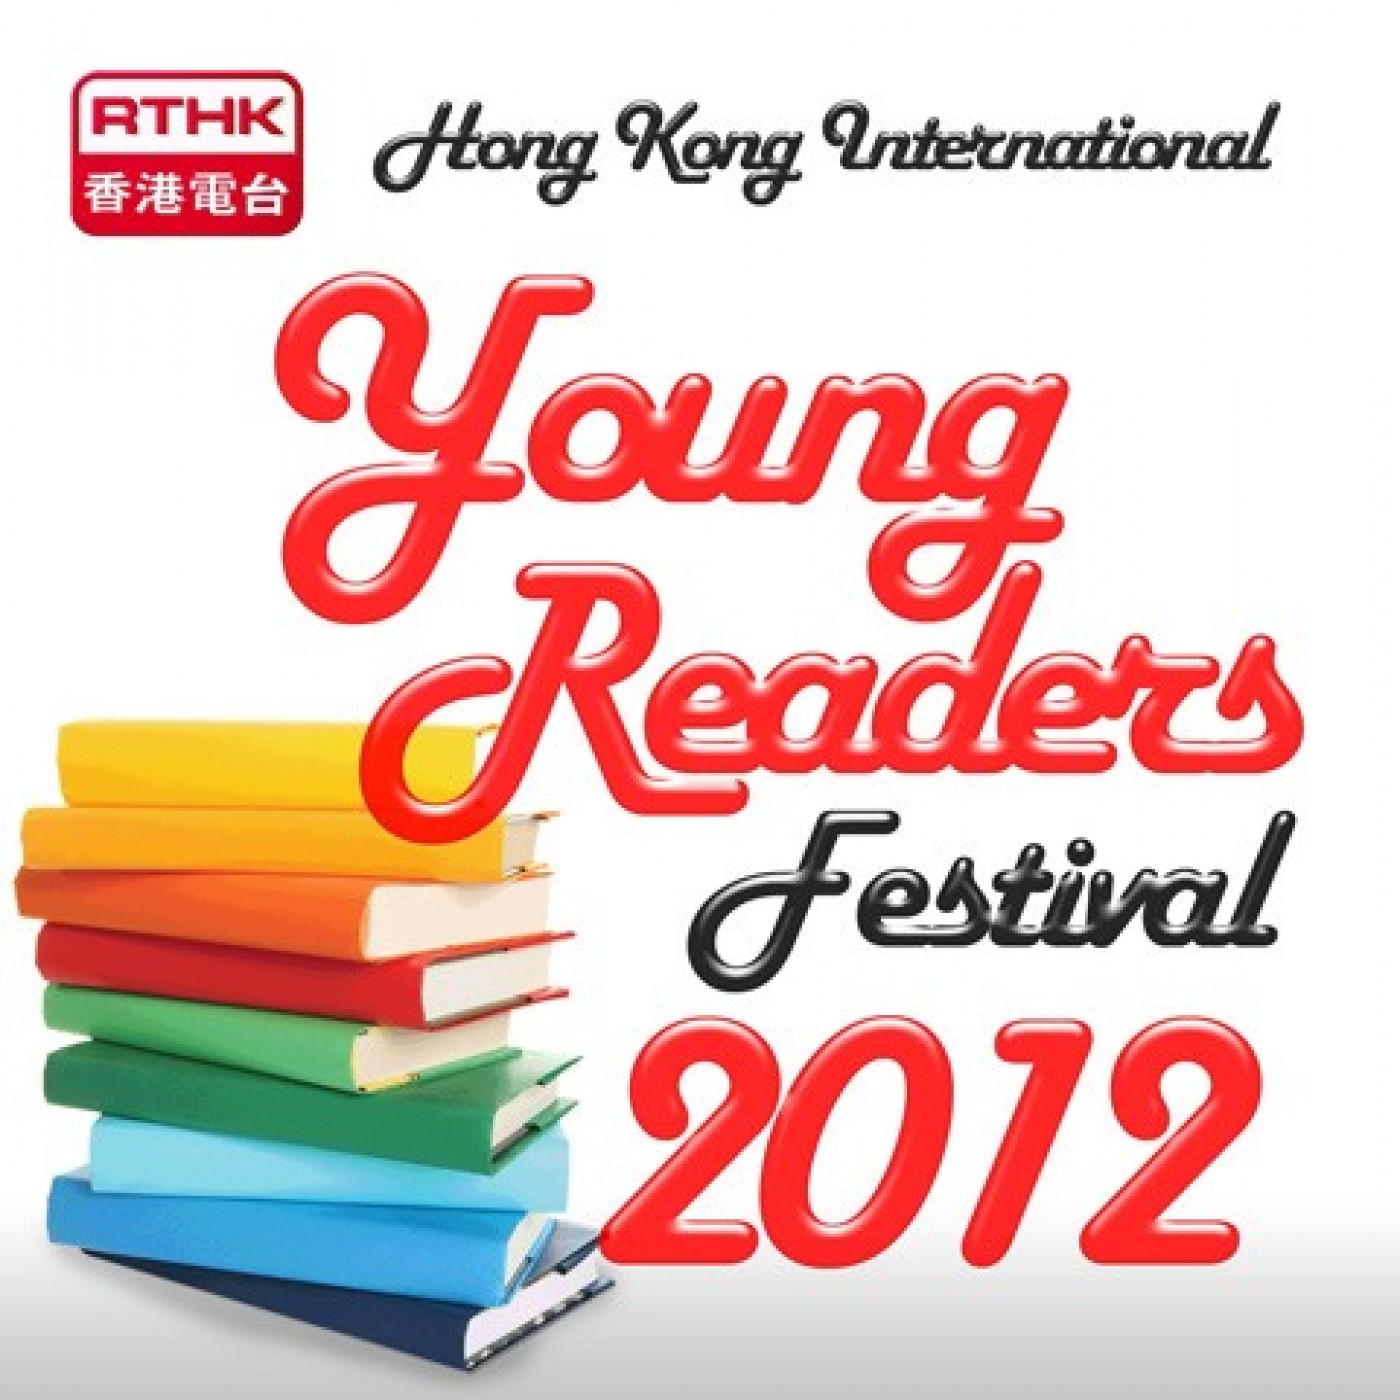 RTHK: Hong Kong International Young Readers Festival 2012